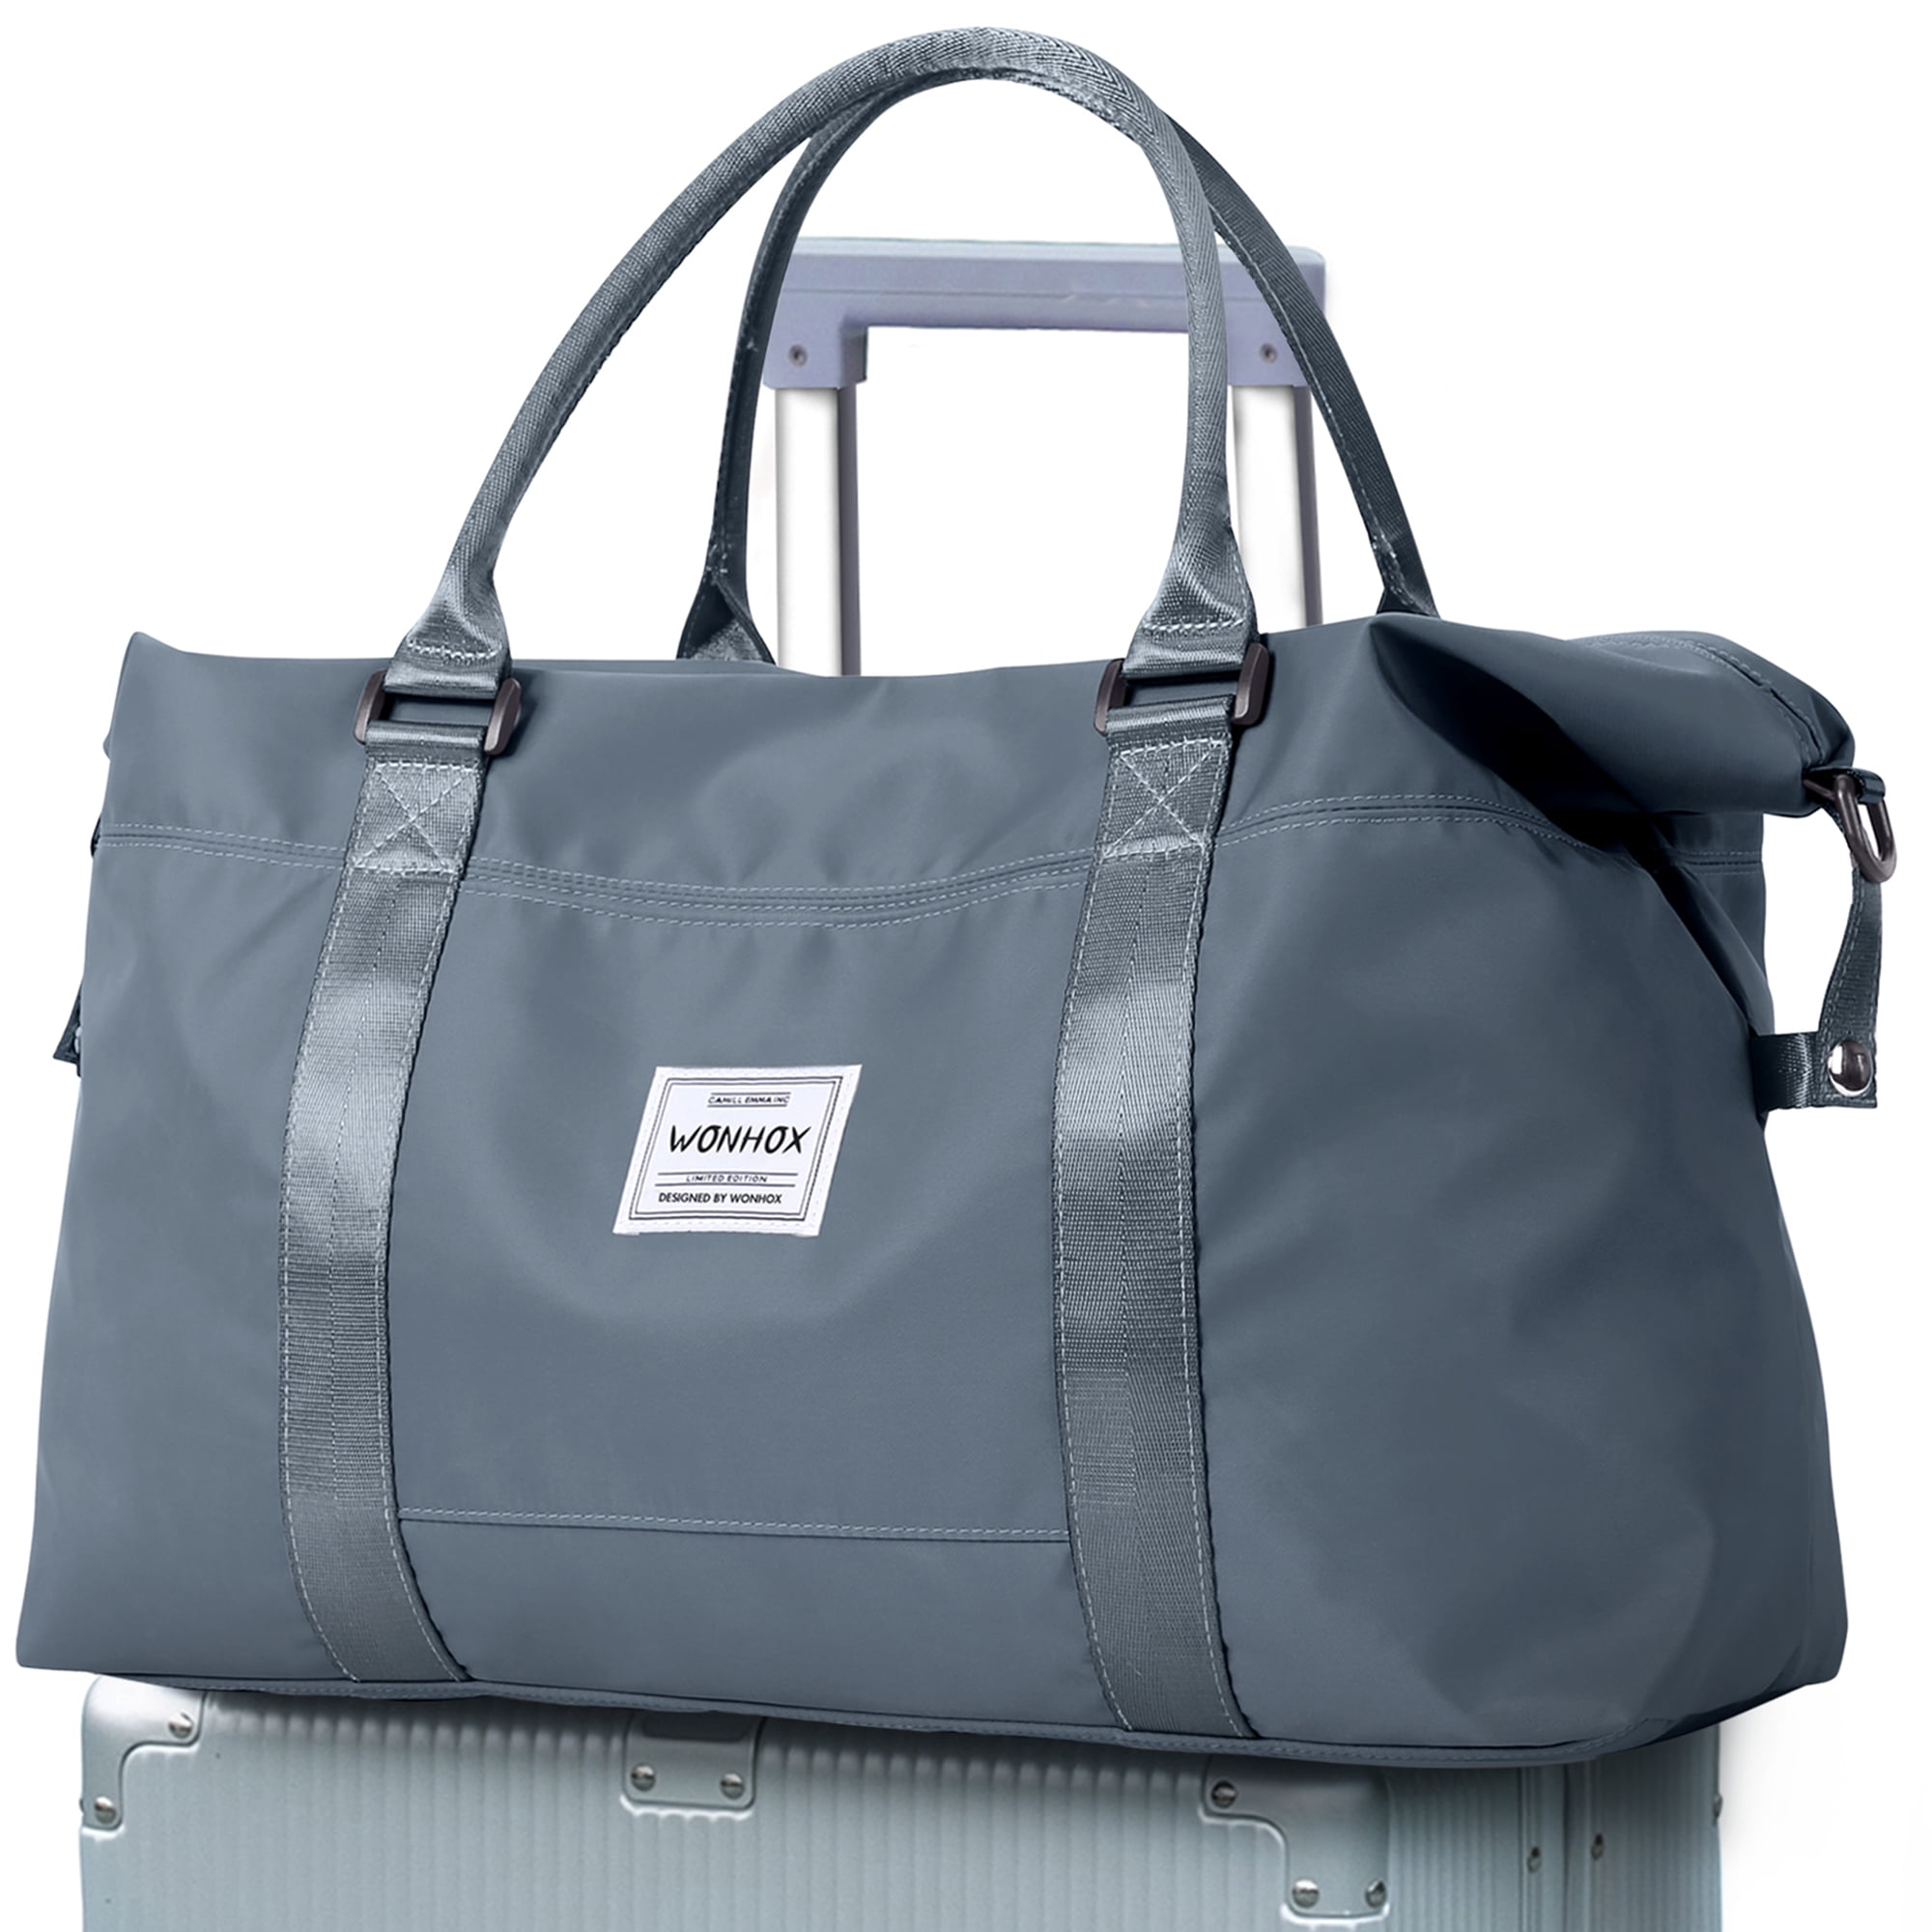 Sport Duffle Bag Travel Bag Large Gym Tote Bag For Women Weekender